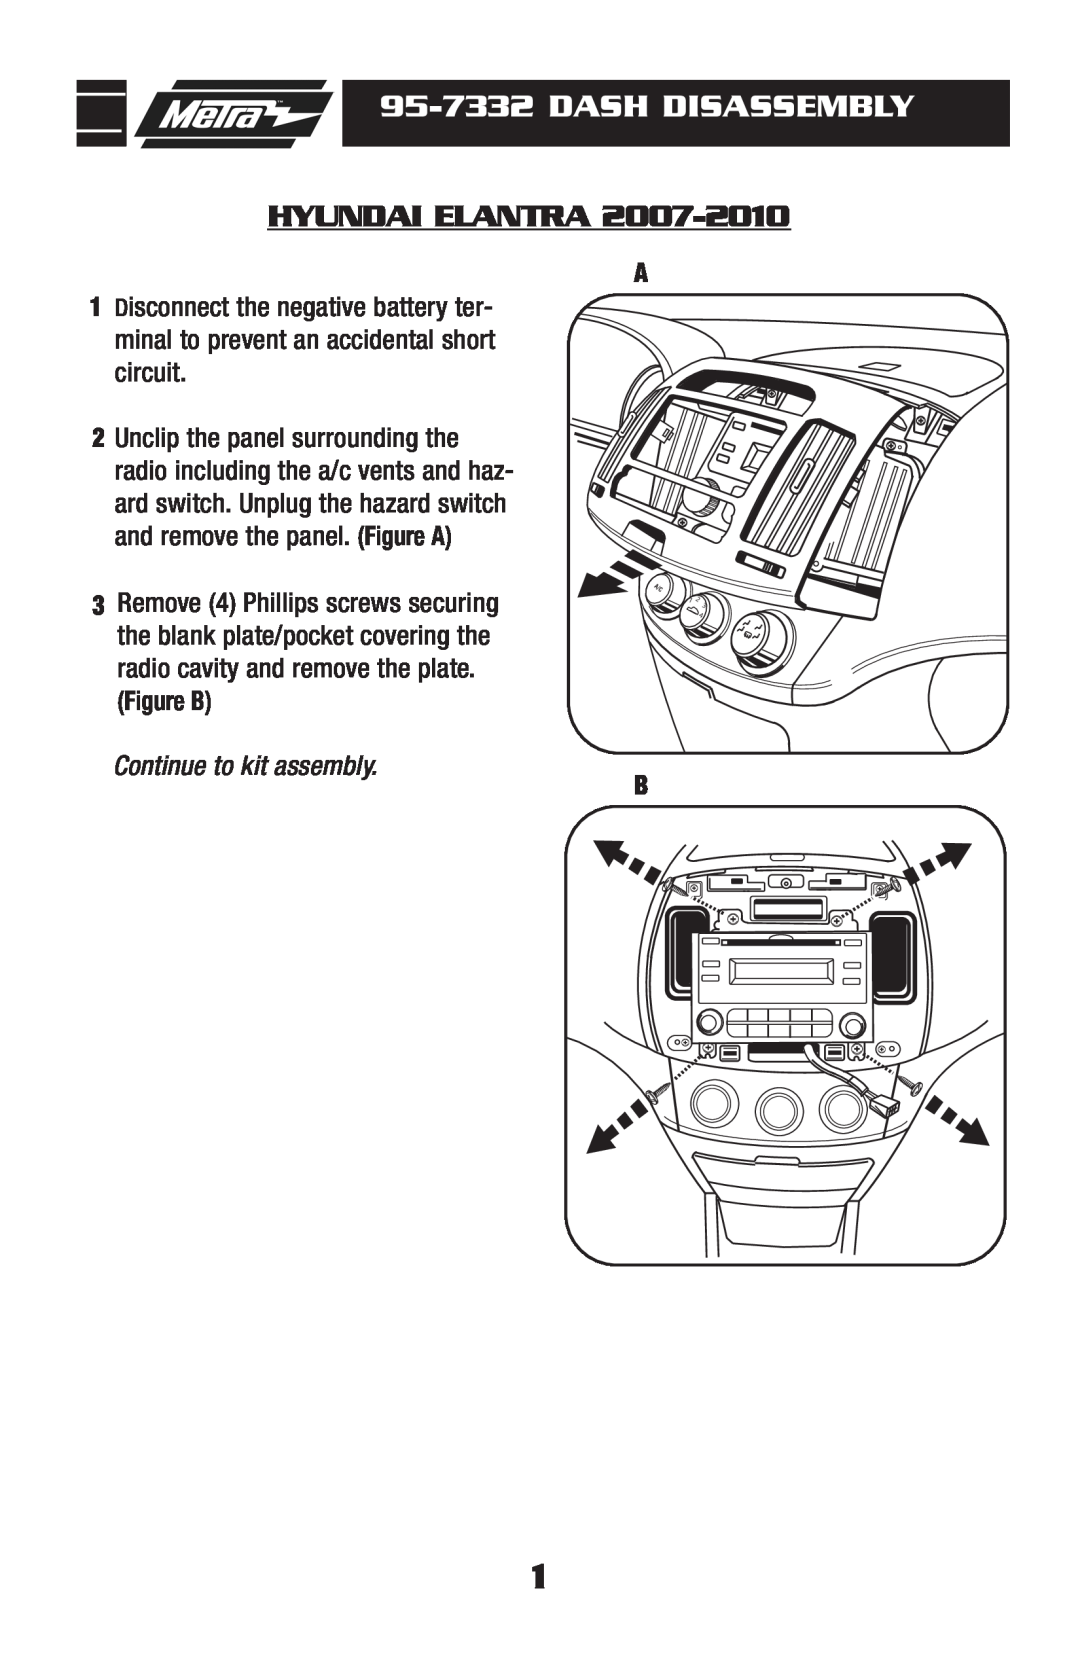 Metra Electronics installation instructions 95-7332DASH DISASSEMBLY, Hyundai Elantra, Figure B, Continue to kit assembly 